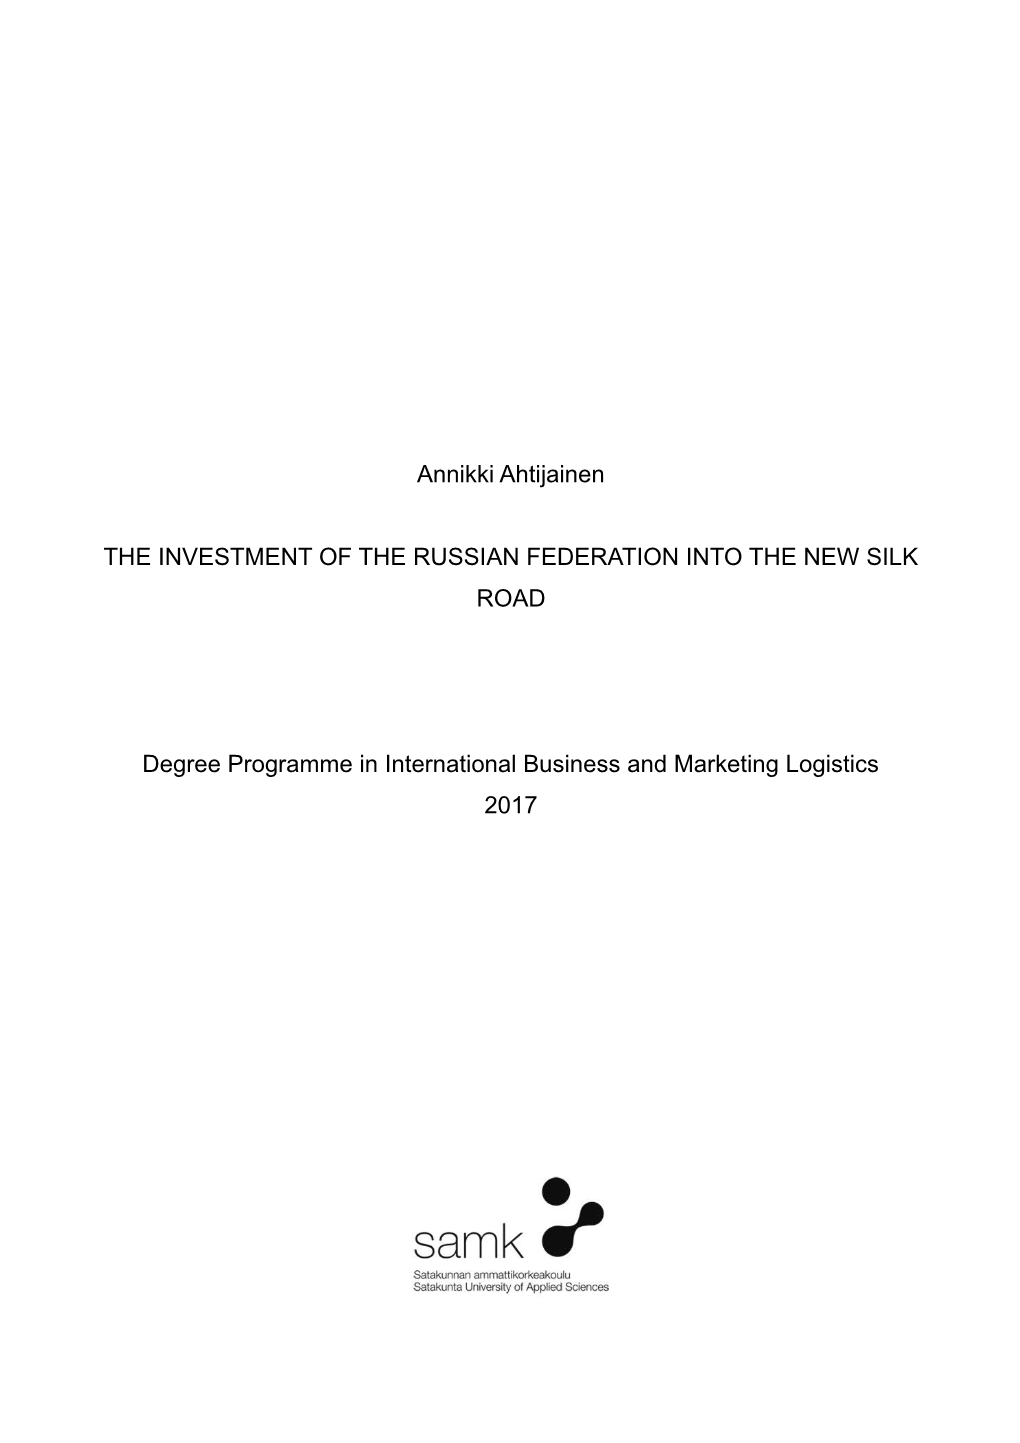 Annikki Ahtijainen the INVESTMENT of the RUSSIAN FEDERATION